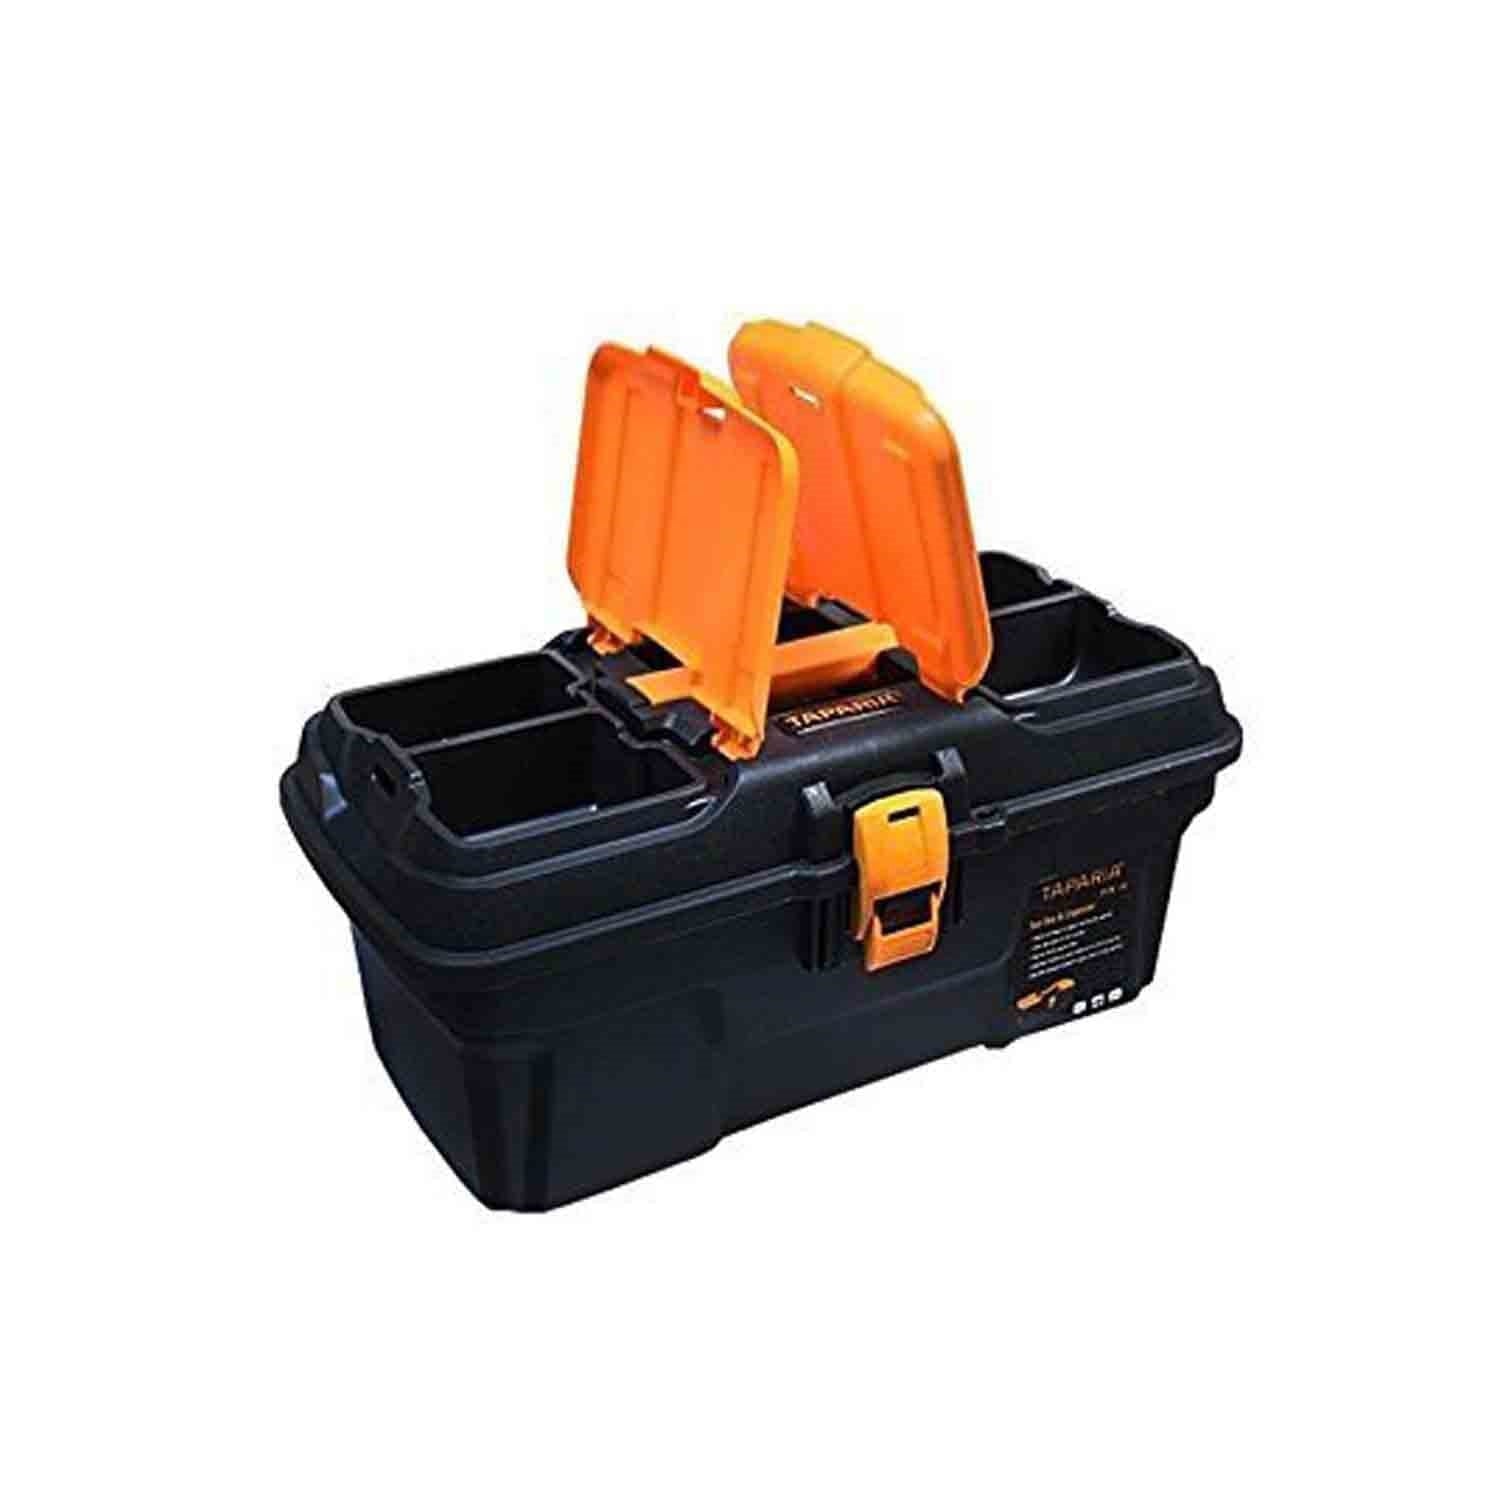 Taparia: PTB 13 Plastic Tool Box With Organizer